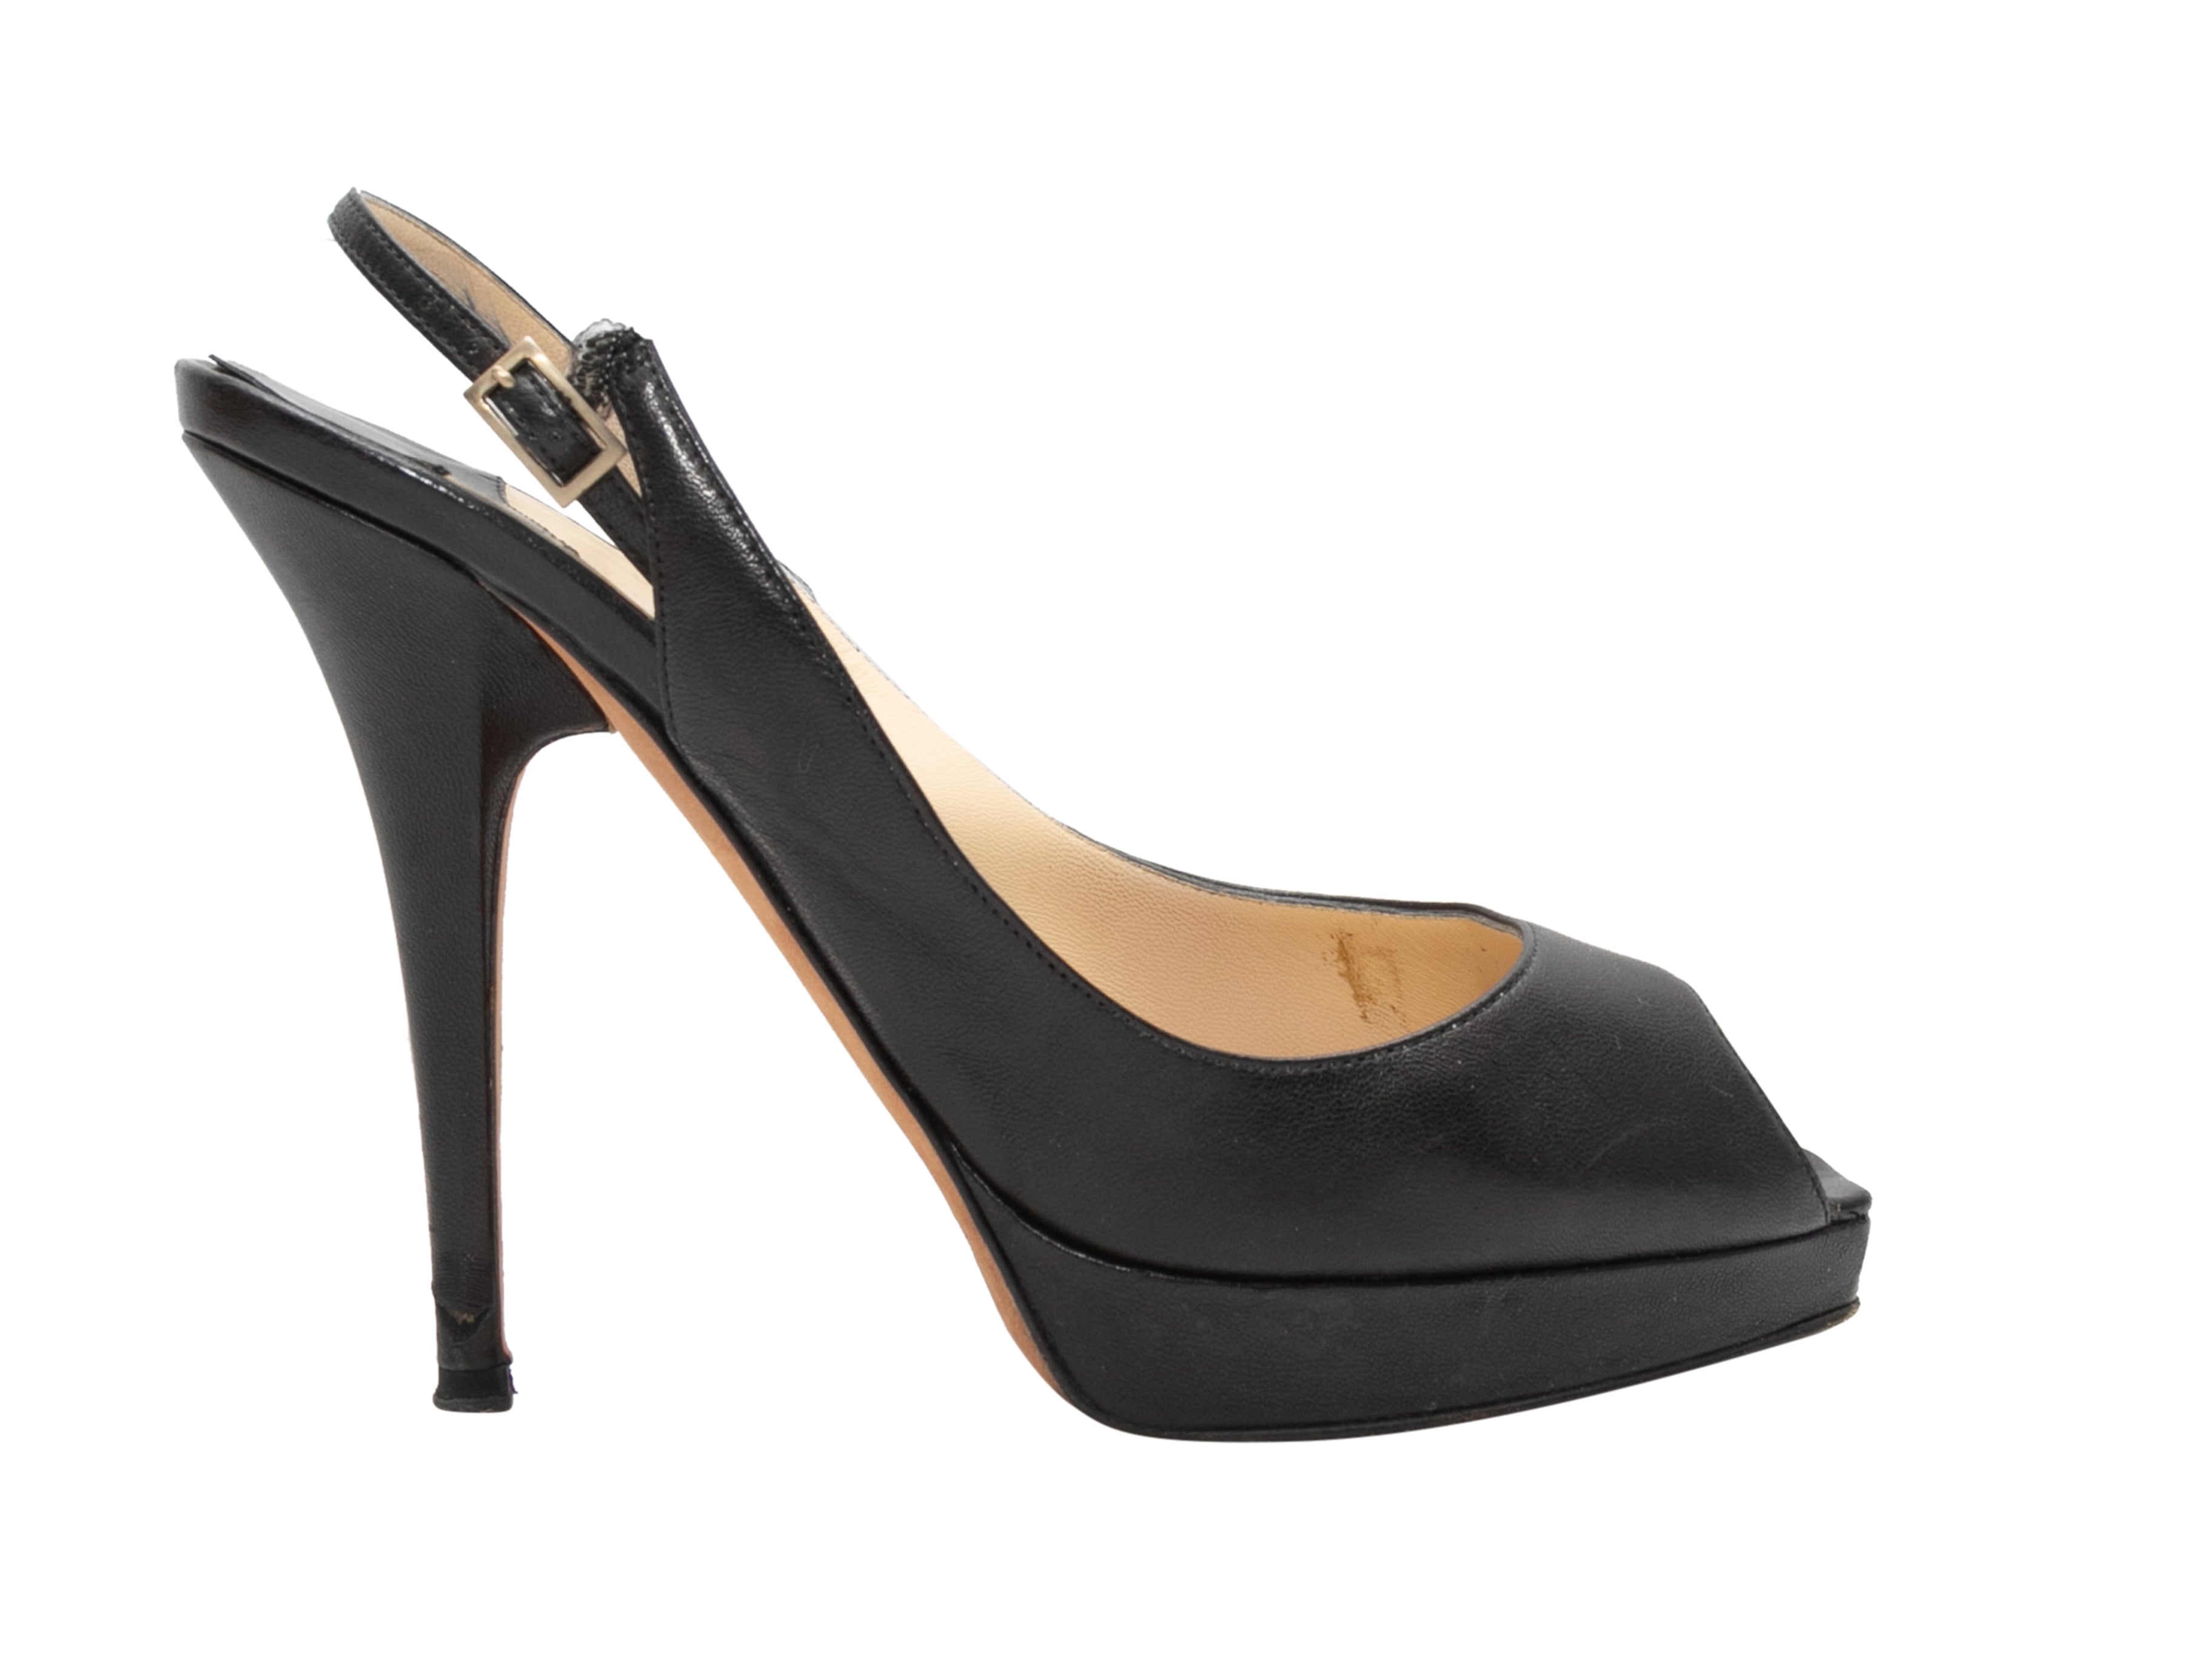 Louis Vuitton open toe red heels size: 37 1/2